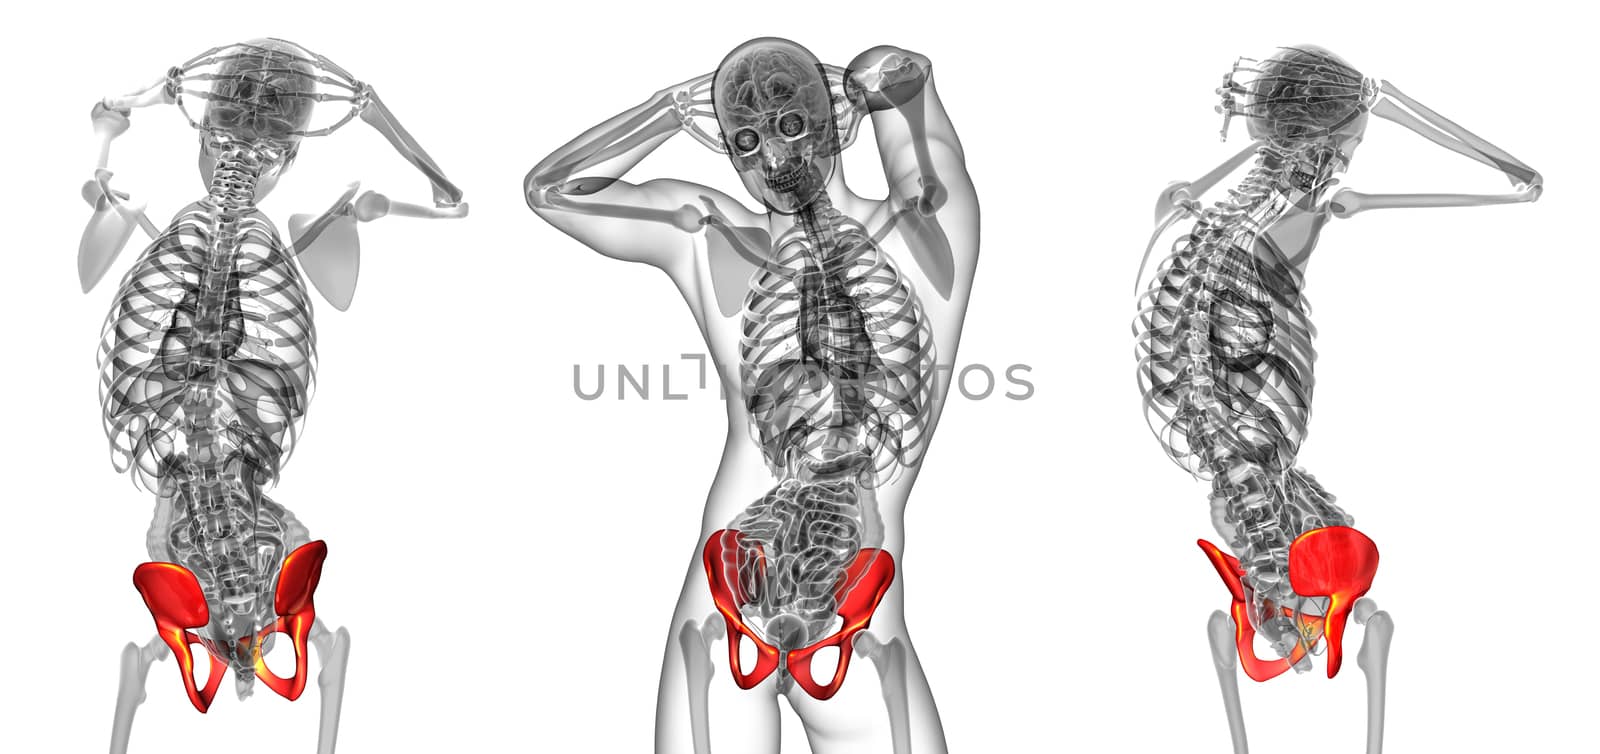 3d rendering medical illustration of the pelvis bone